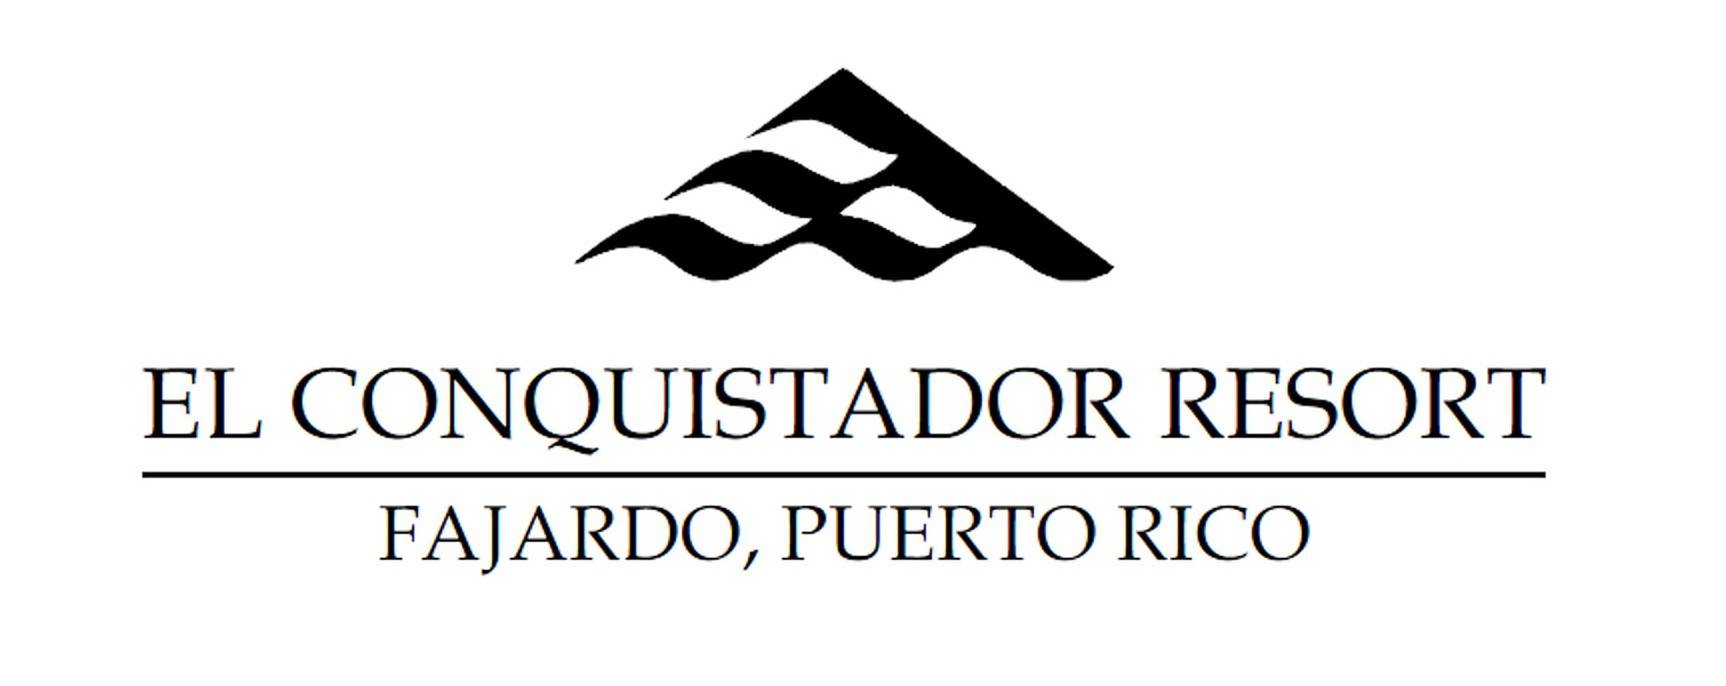 EL CONQUISTADOR RESORT FAJARDO, PUERTO RICO - Royale Blue Hospitality Llc  Trademark Registration